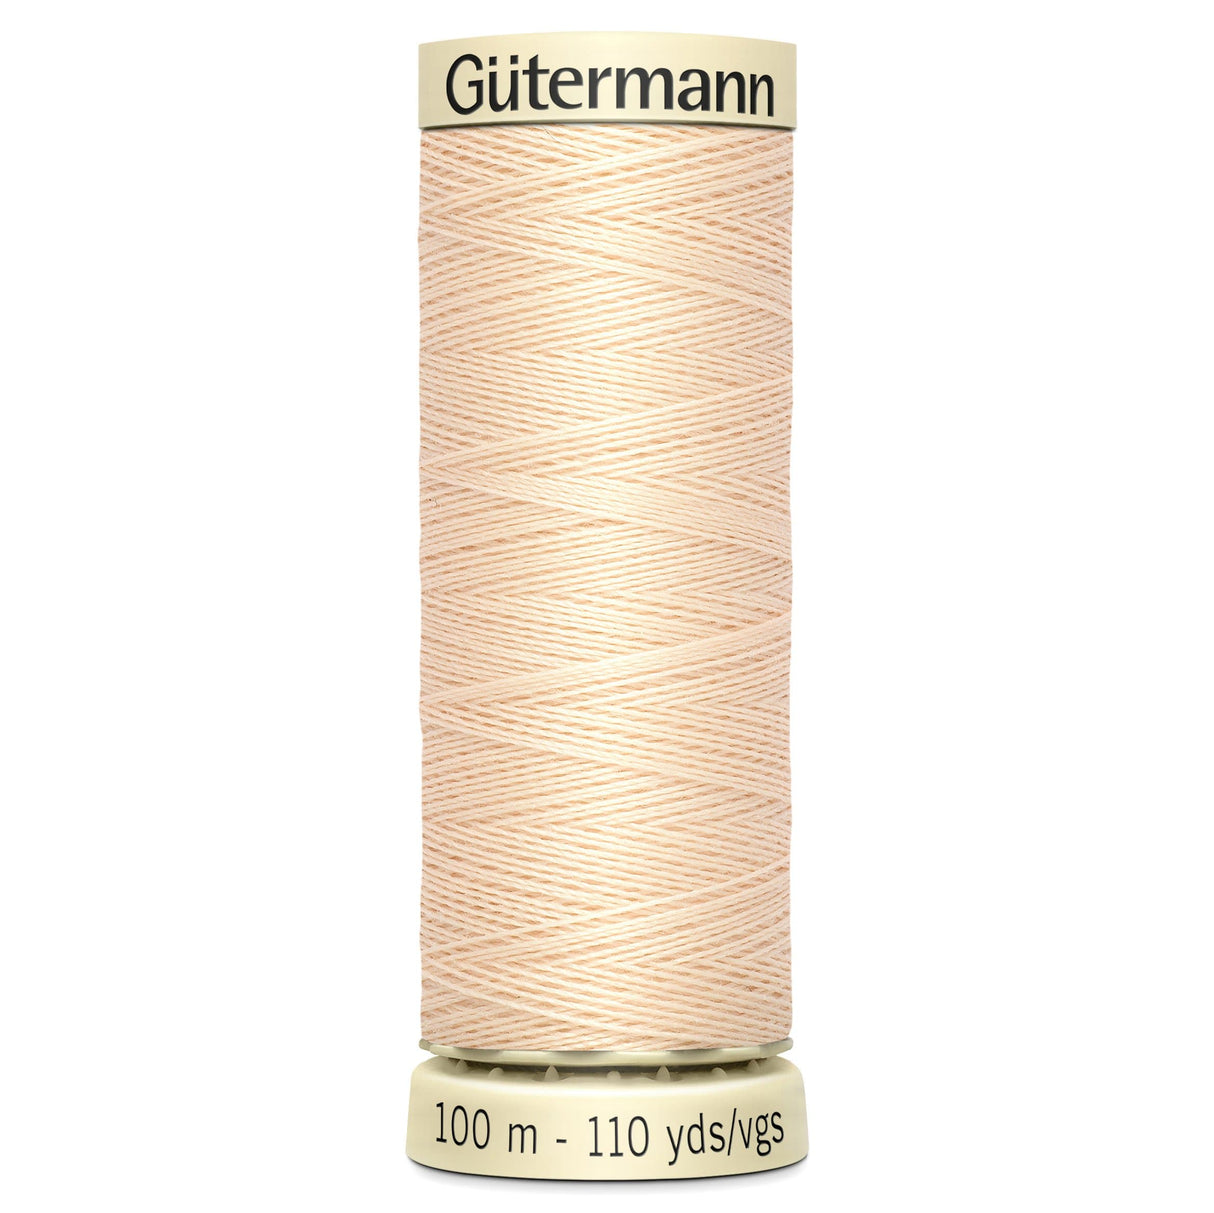 Groves Haberdashery 5 Gutermann Thread Sewing Cotton 100 m Black to Pink